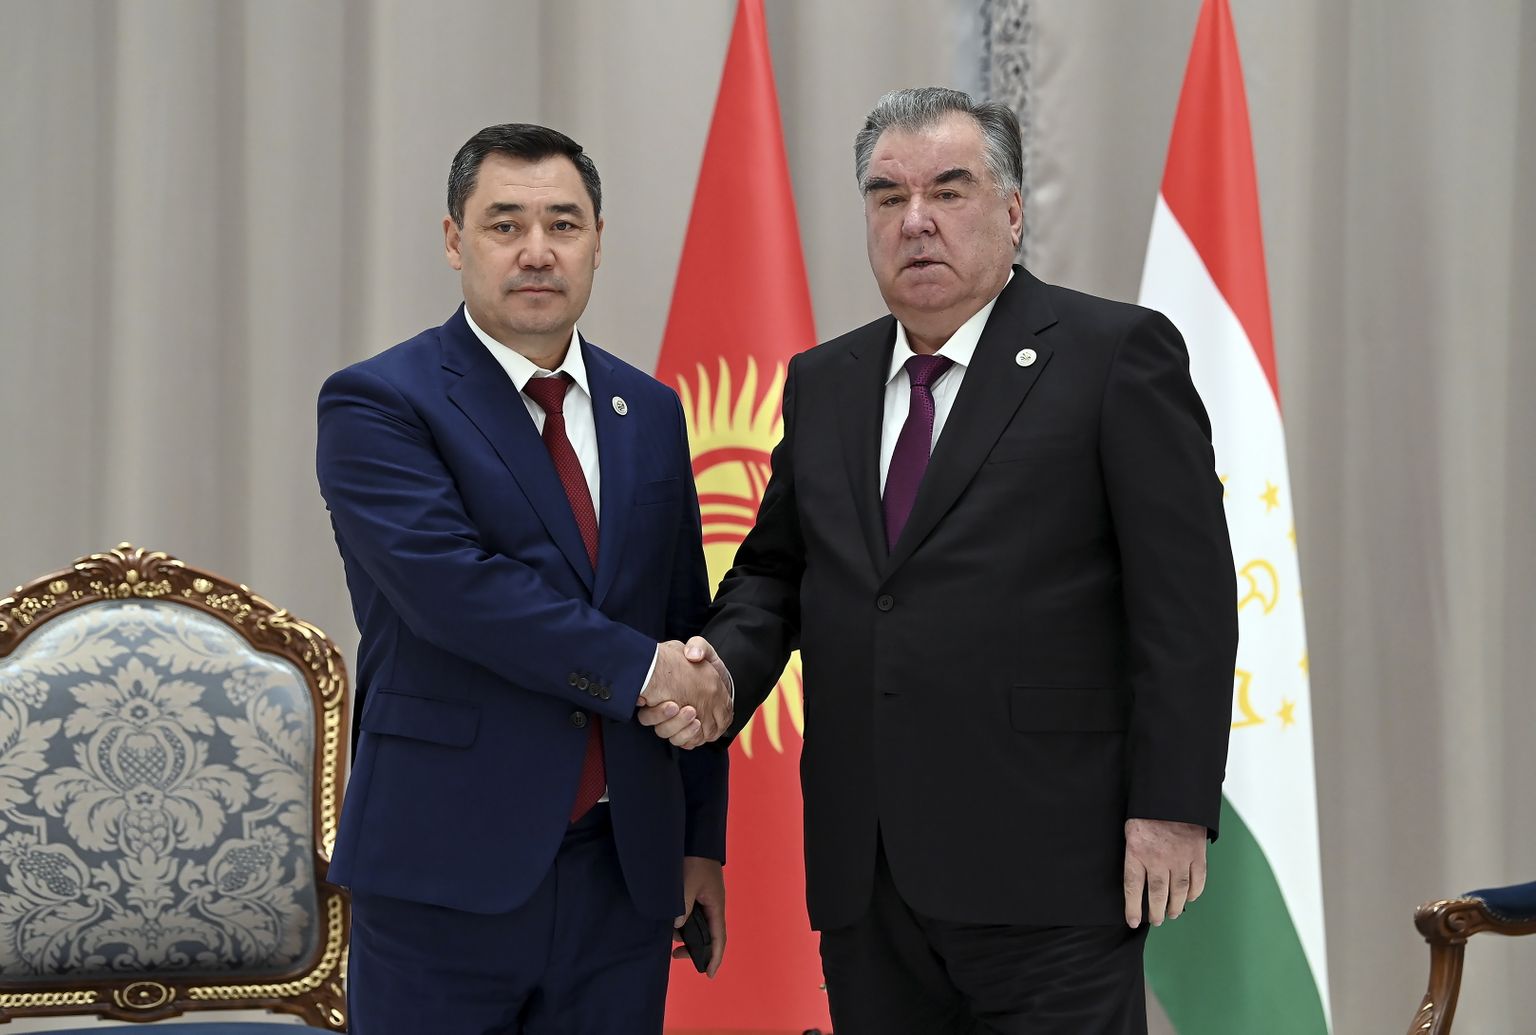 Kõrgõzstani president Sadõr Džaparov (vasakul) ja Tadžikistani president Emomali Rahmon Usbekistanis Samarkandis 16. september 2022.